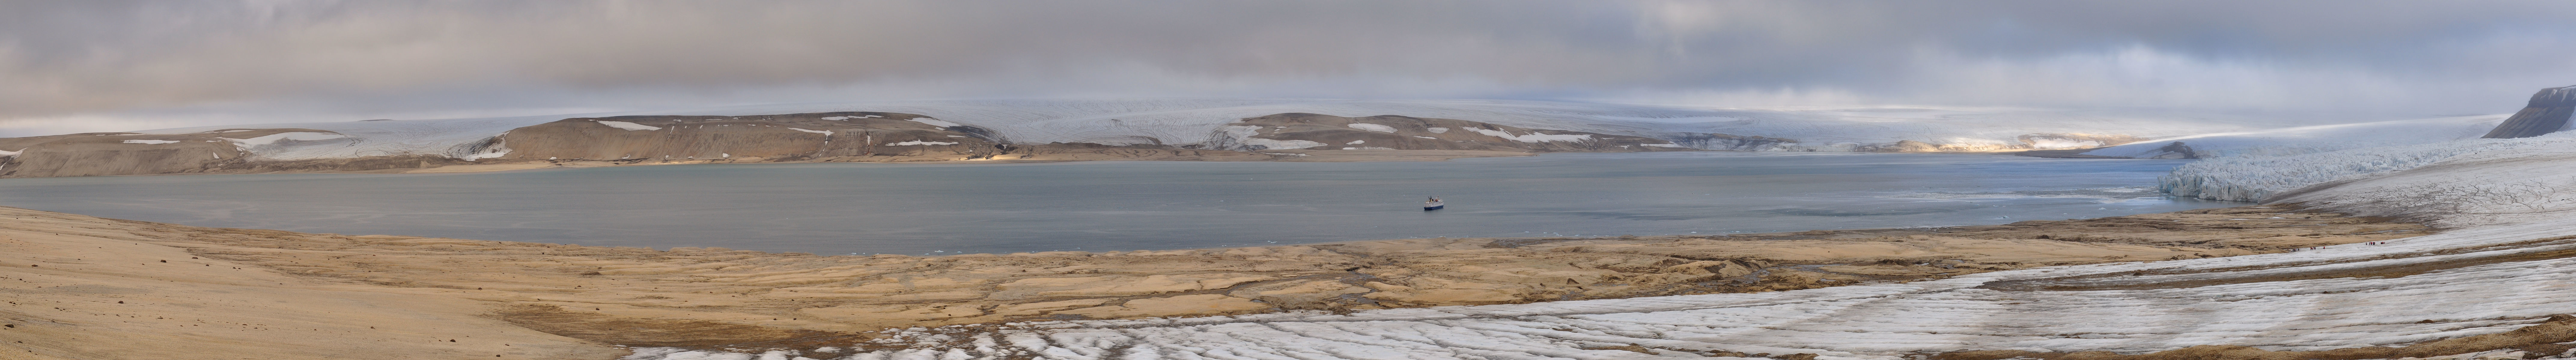 Palanderfjord - Svalbard6.jpg